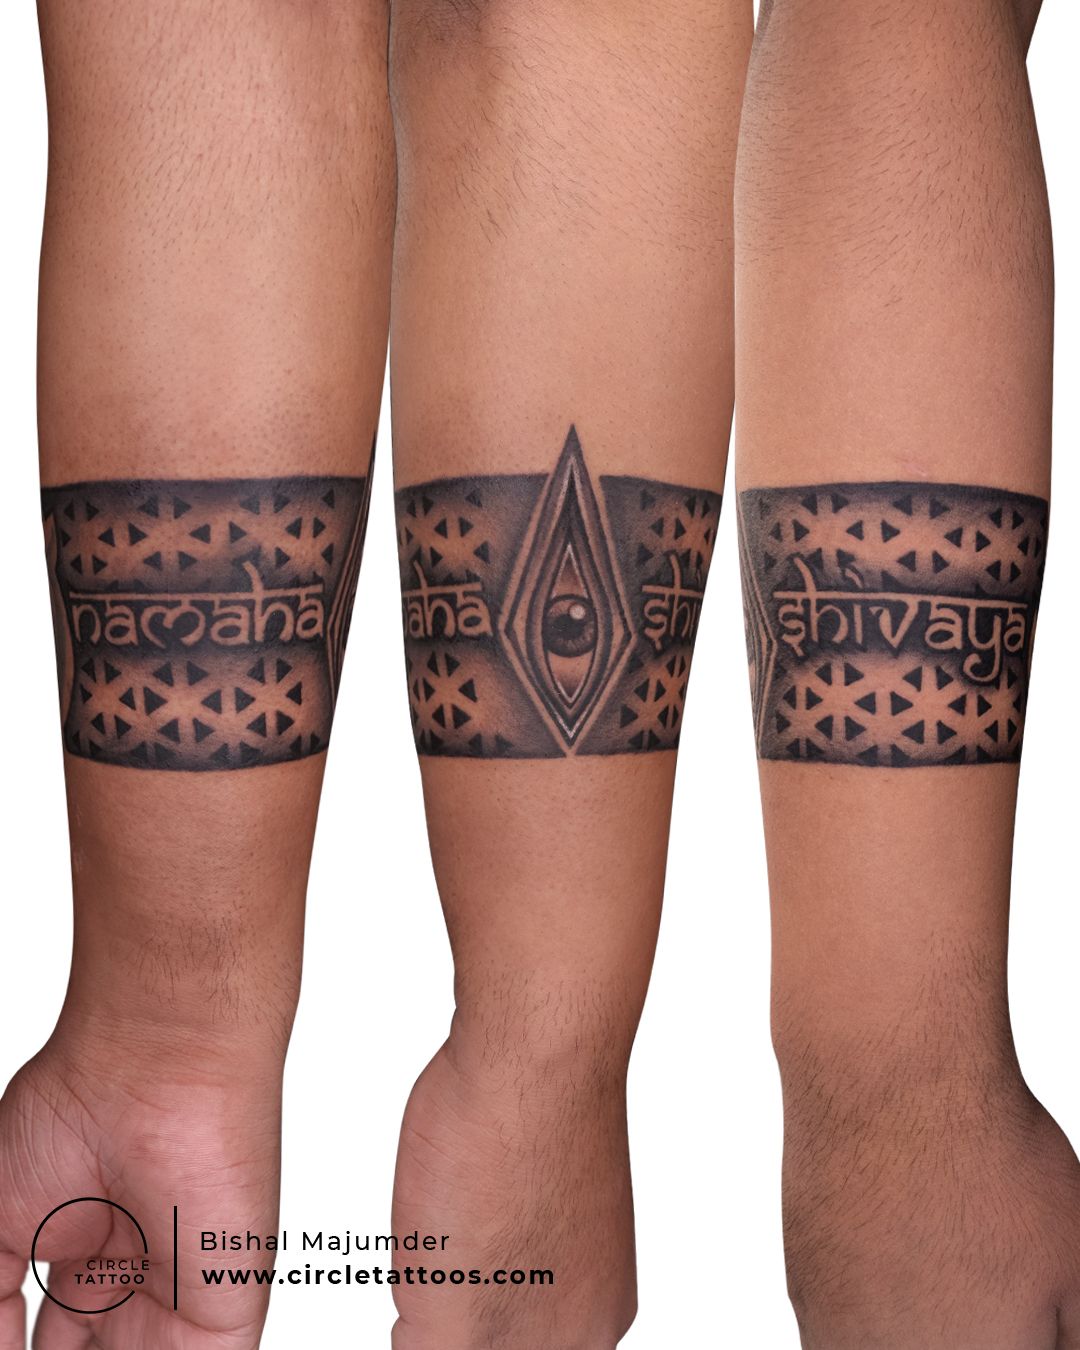 50 Unique Forearm Tattoos For Men  Cool Ink Design Ideas  Forearm band  tattoos Band tattoo designs Band tattoos for men